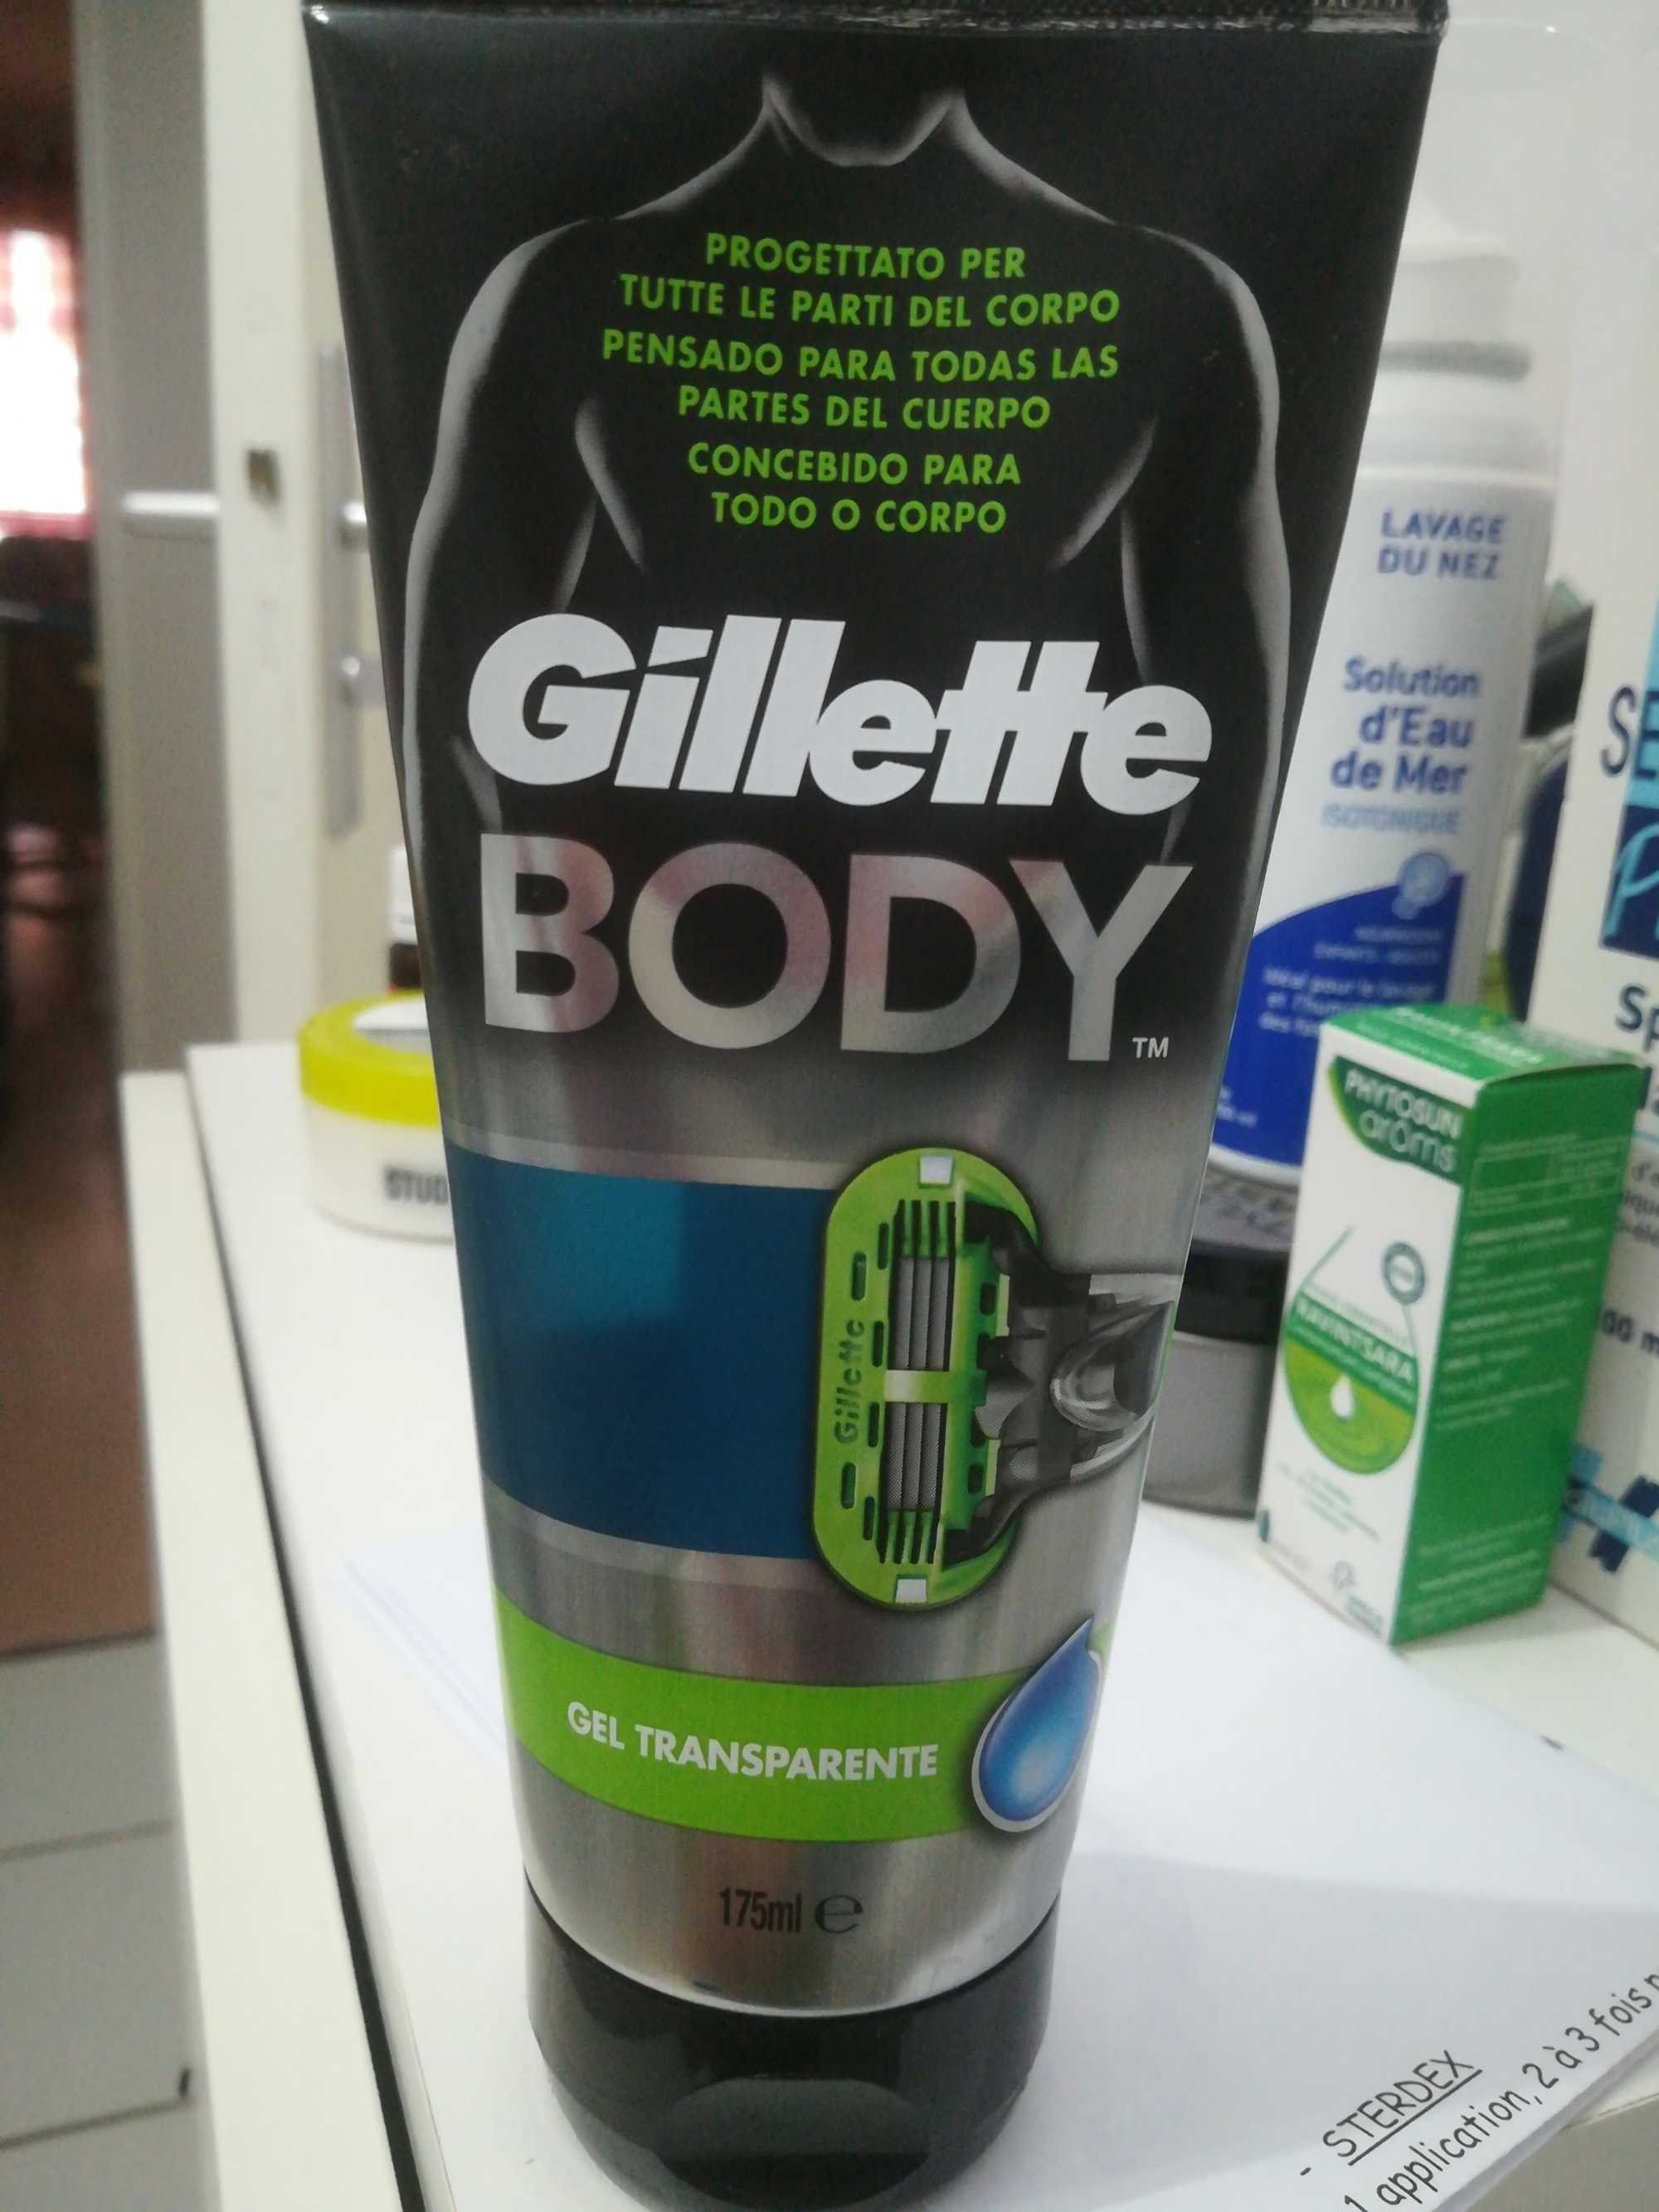 Gillette Body - Product - es